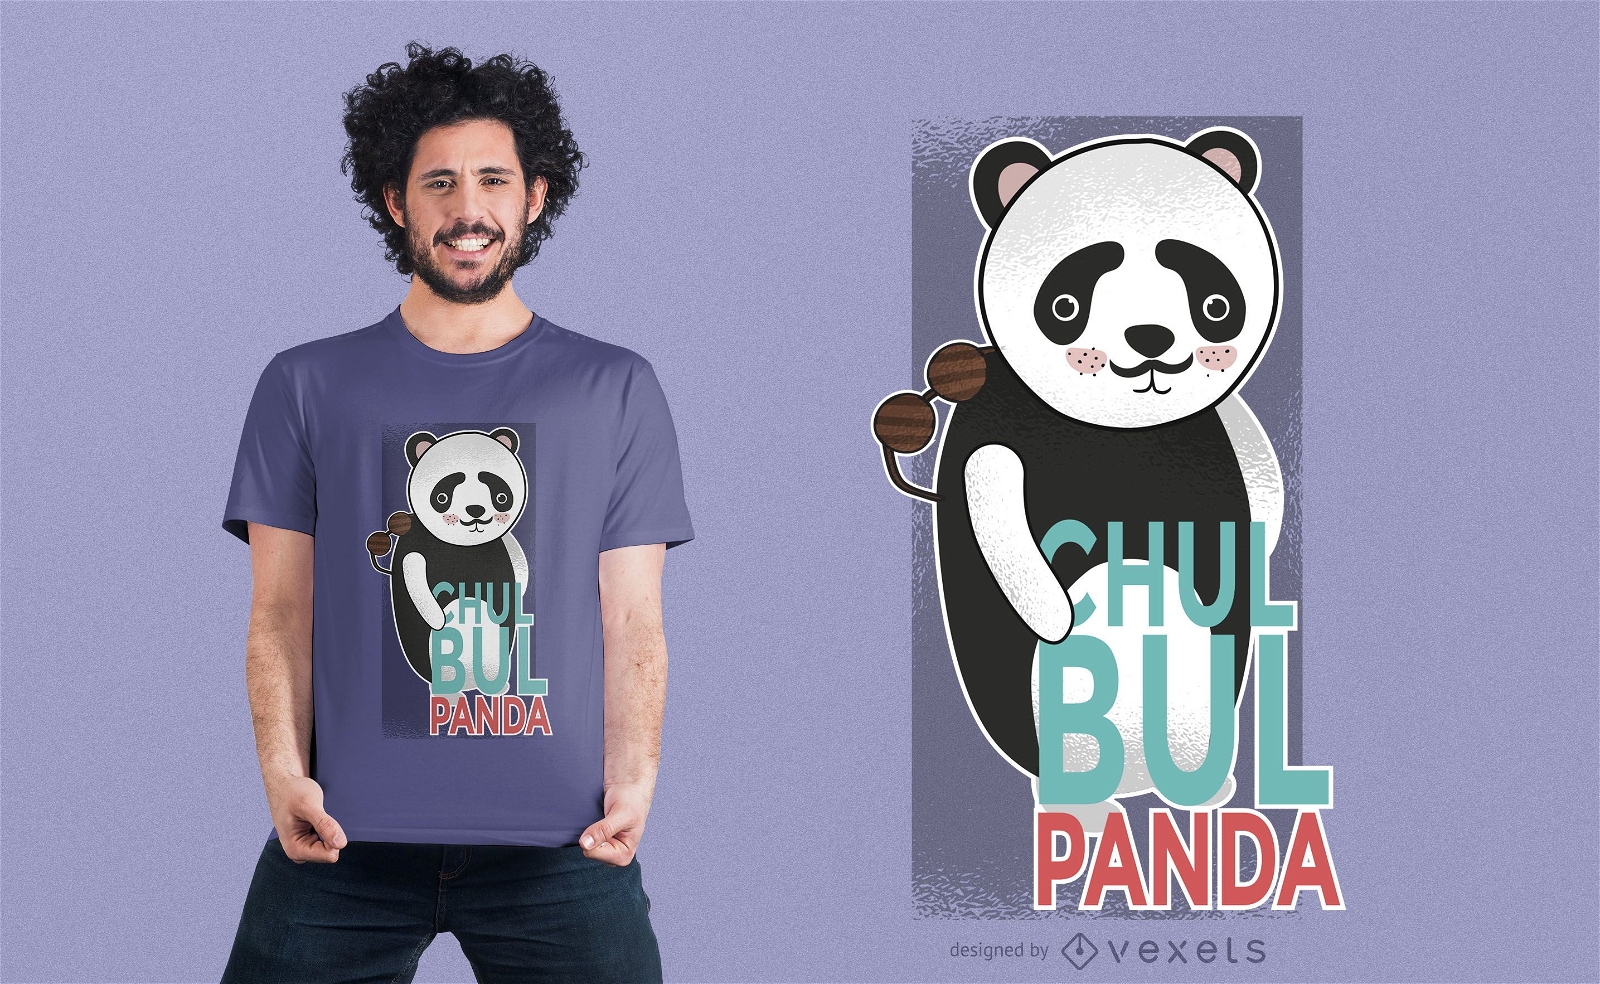 Chulbul Panda T-Shirt Design